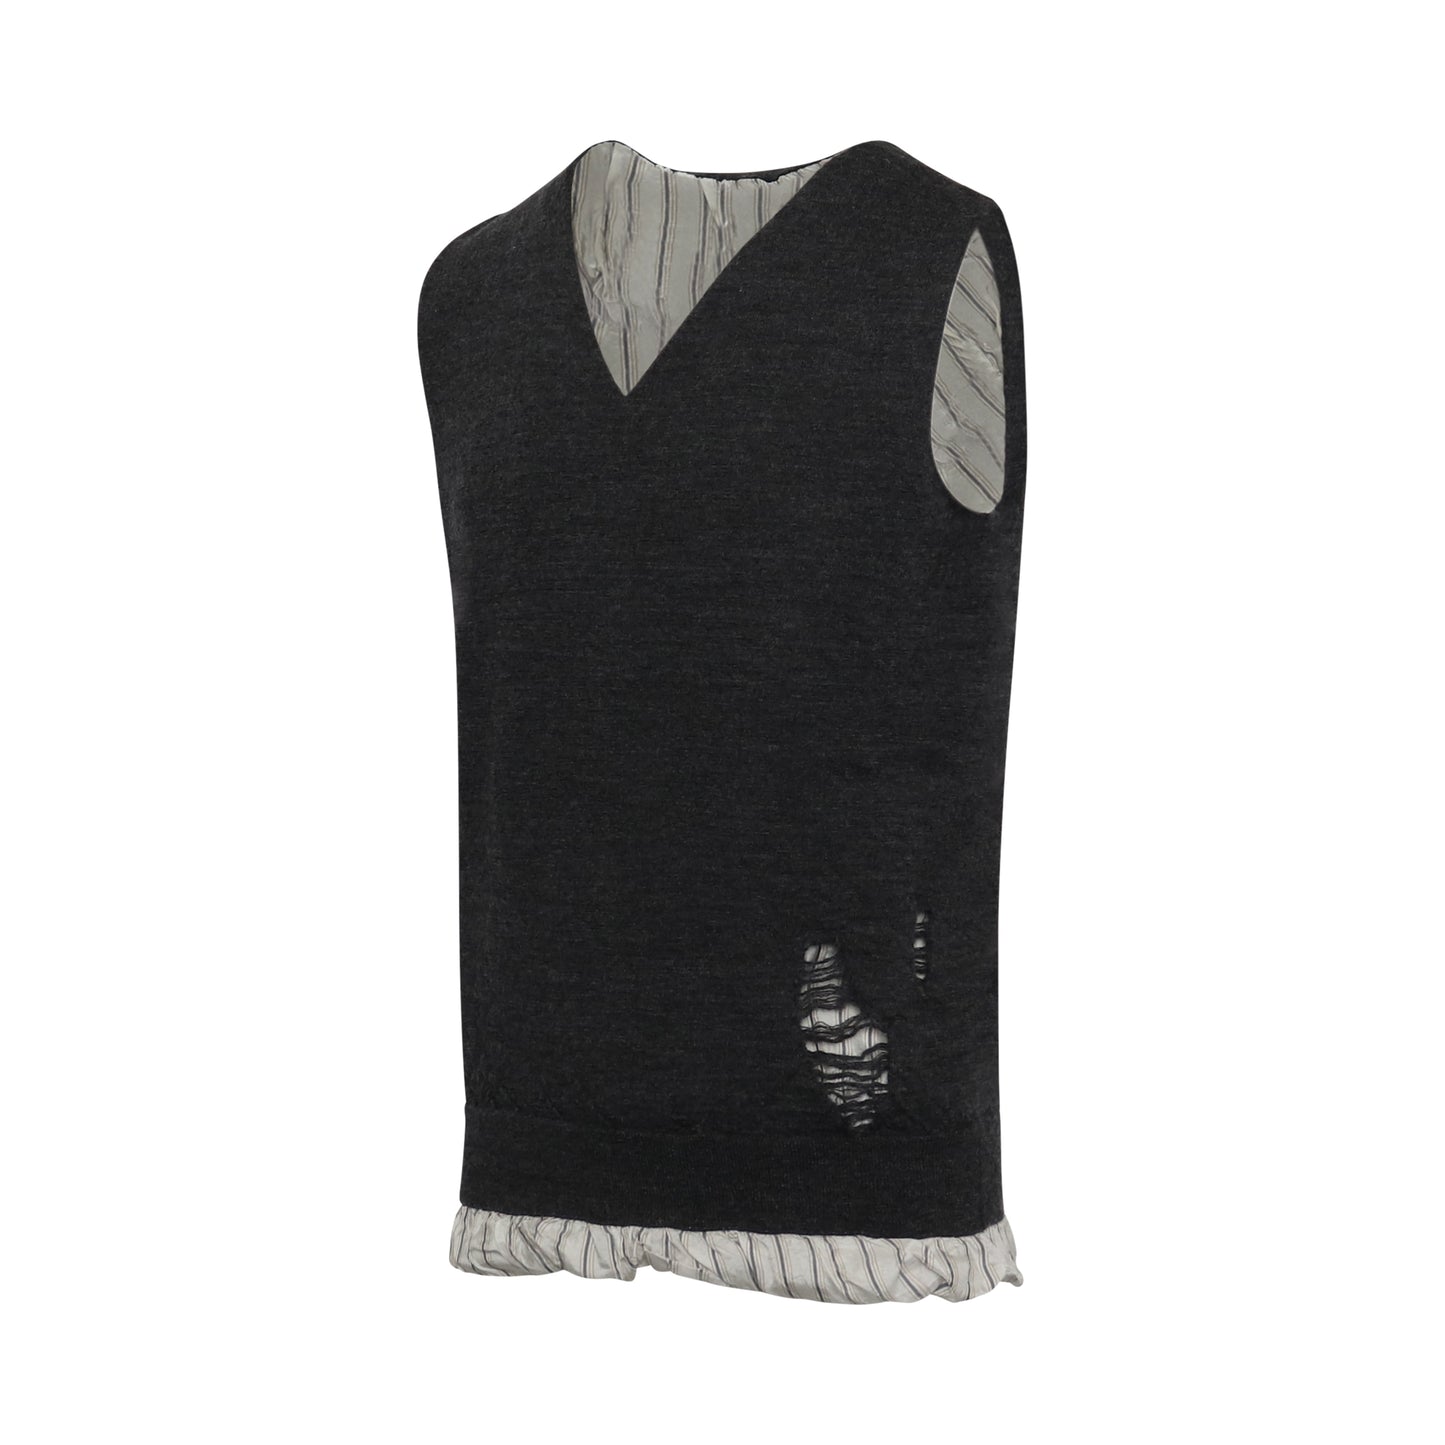 Distressed Knit Vest Sweater in Dark Grey